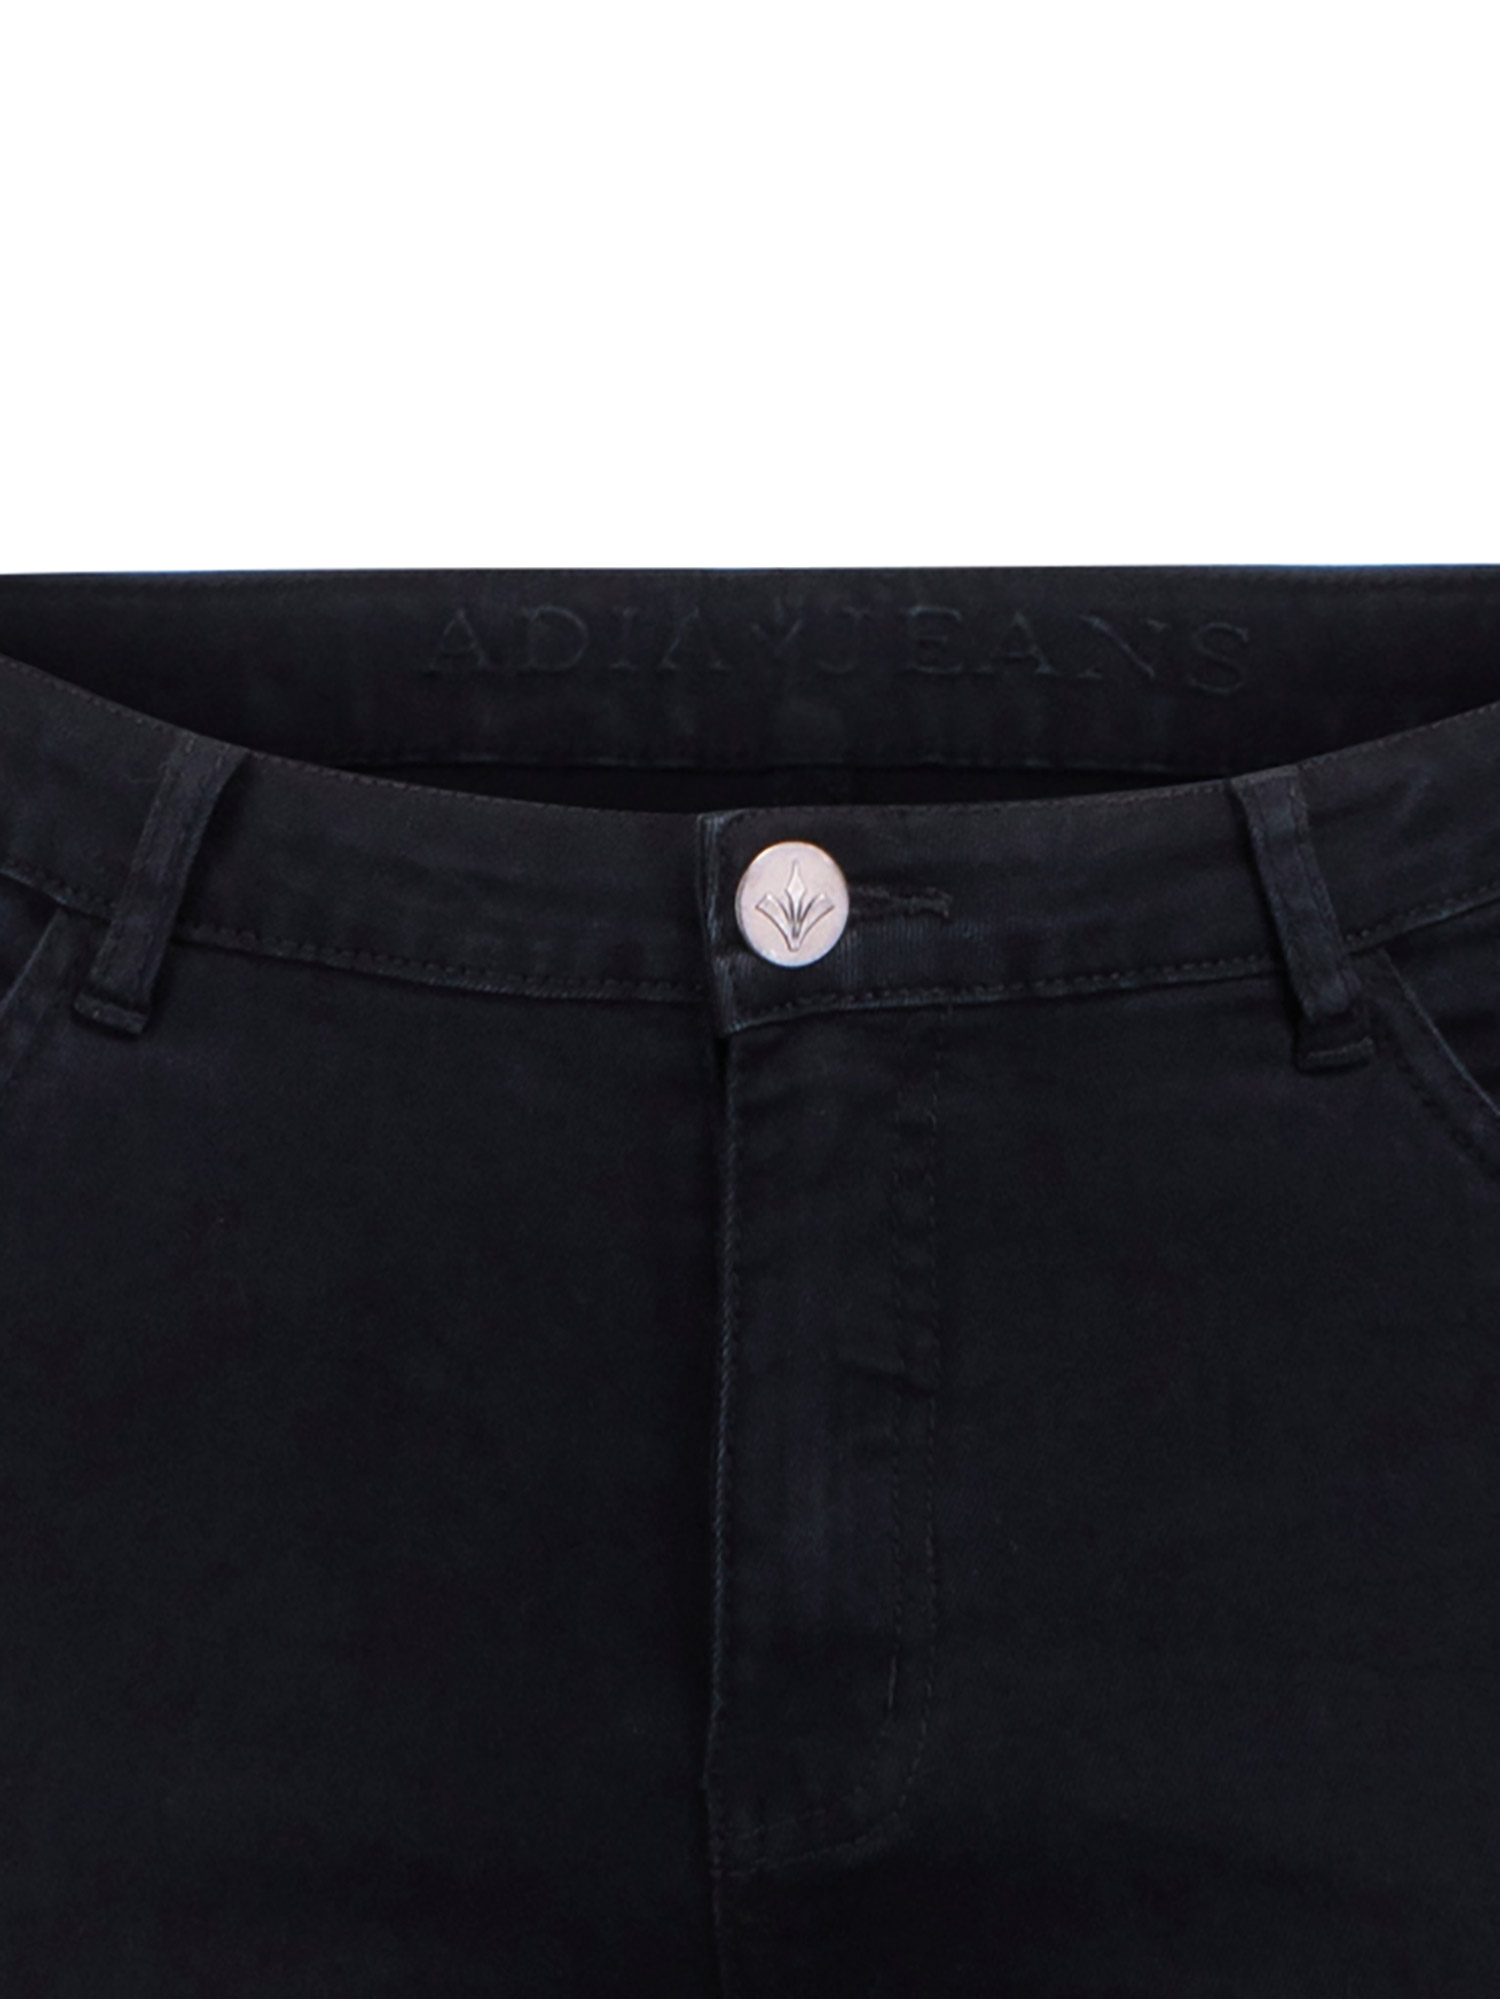 MILAN - Svarte stretch jeans fra Adia